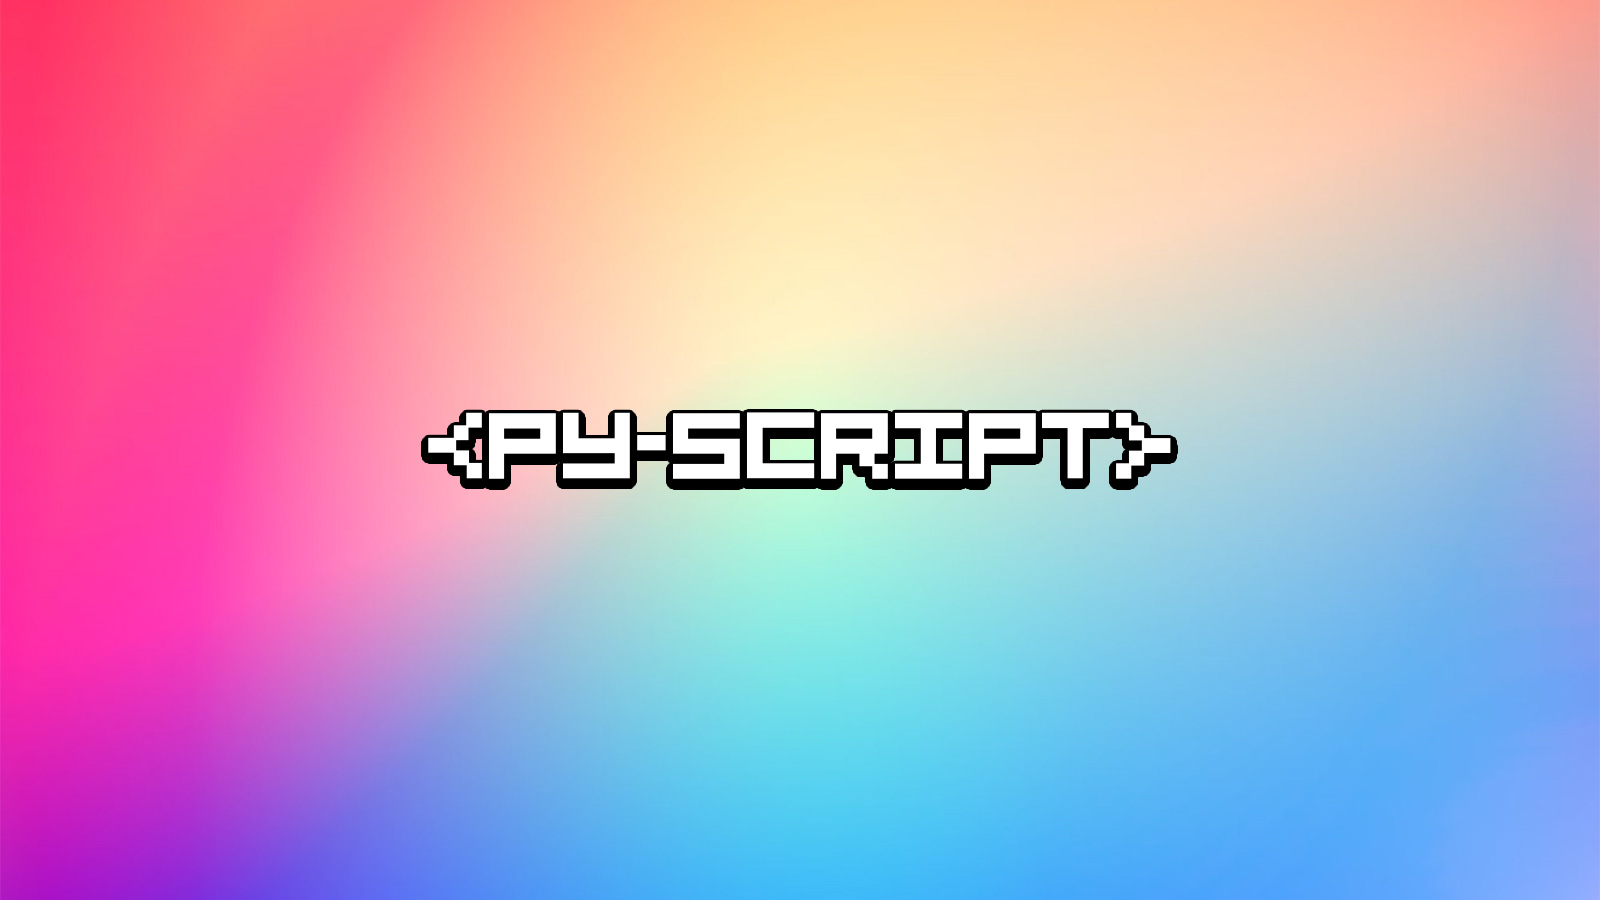 PyScript